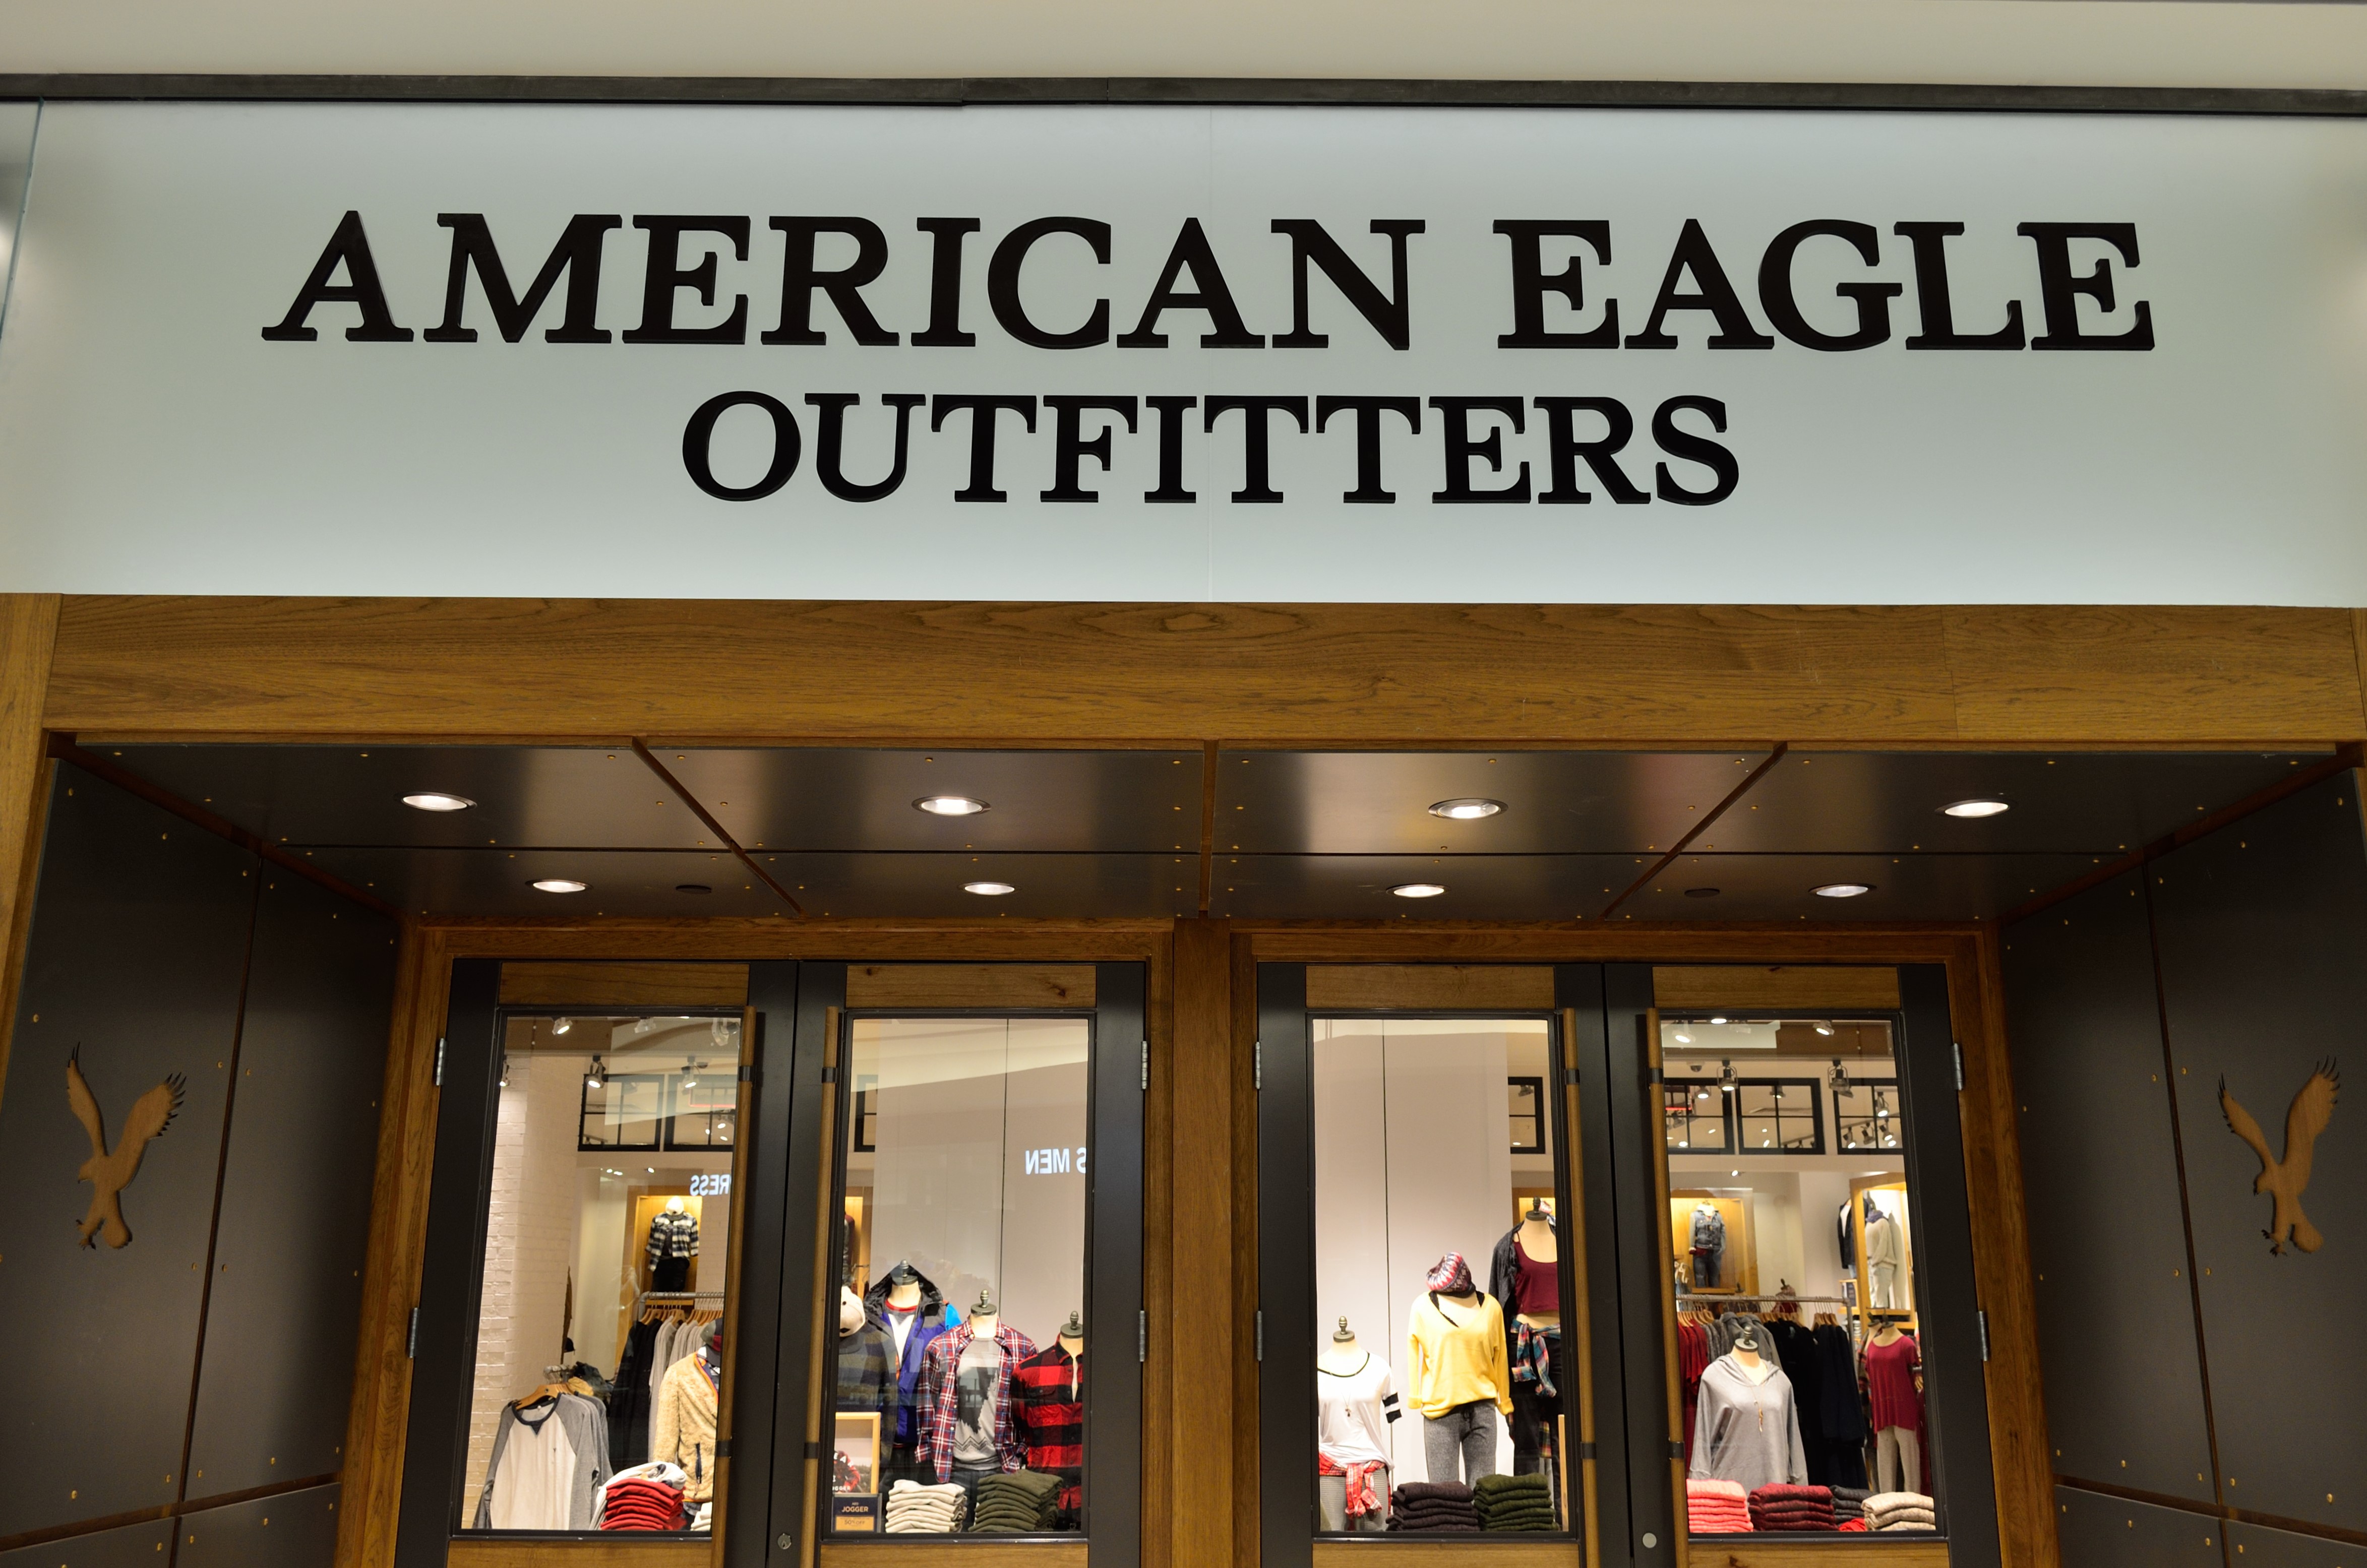 Американ игл. American Eagle Outfitters. American Eagle Outfitters одежда. Москва American Eagle. Американ игл в России.